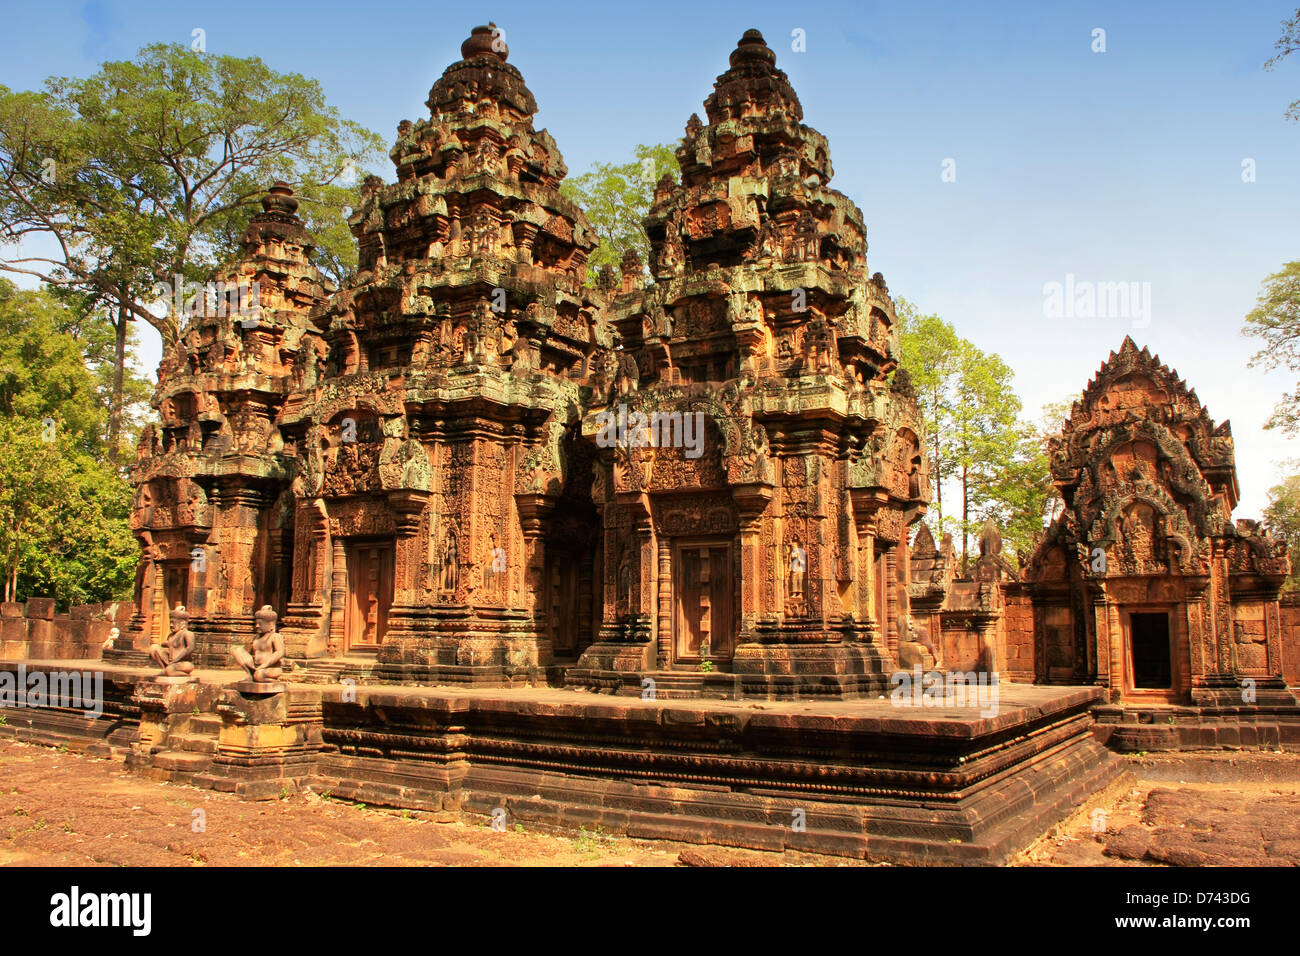 Banteay Srey temple, Angkor area, Siem Reap, Cambodia Stock Photo